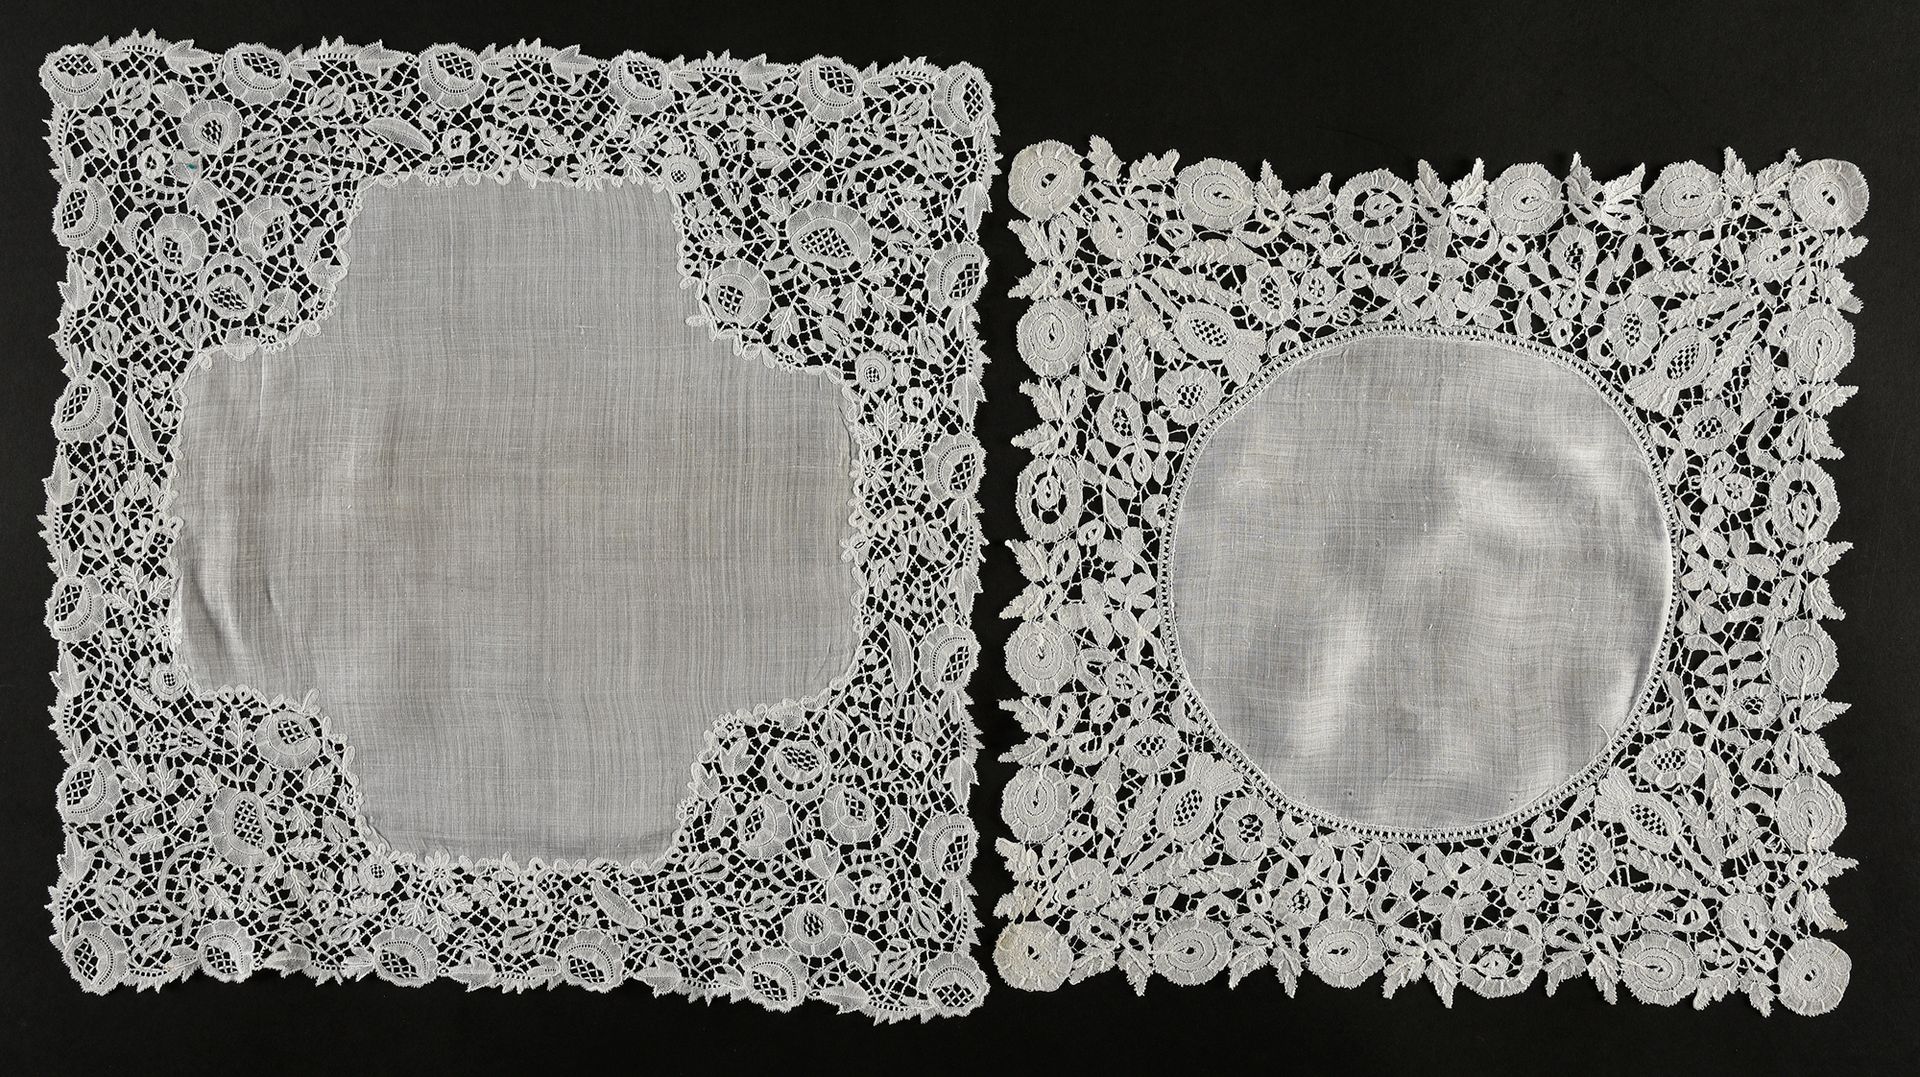 Null Dos pañuelos, Honiton, husos, Inglaterra, 2ª mitad del siglo XIX.

Un pañue&hellip;